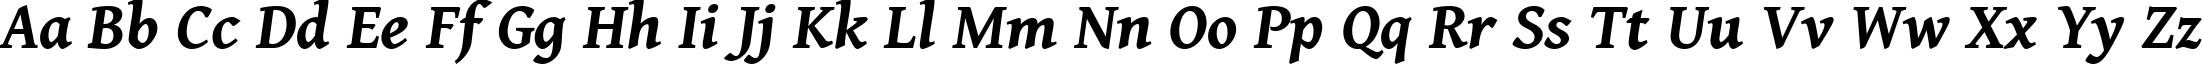 Пример написания английского алфавита шрифтом Gentium Book Basic Bold Italic